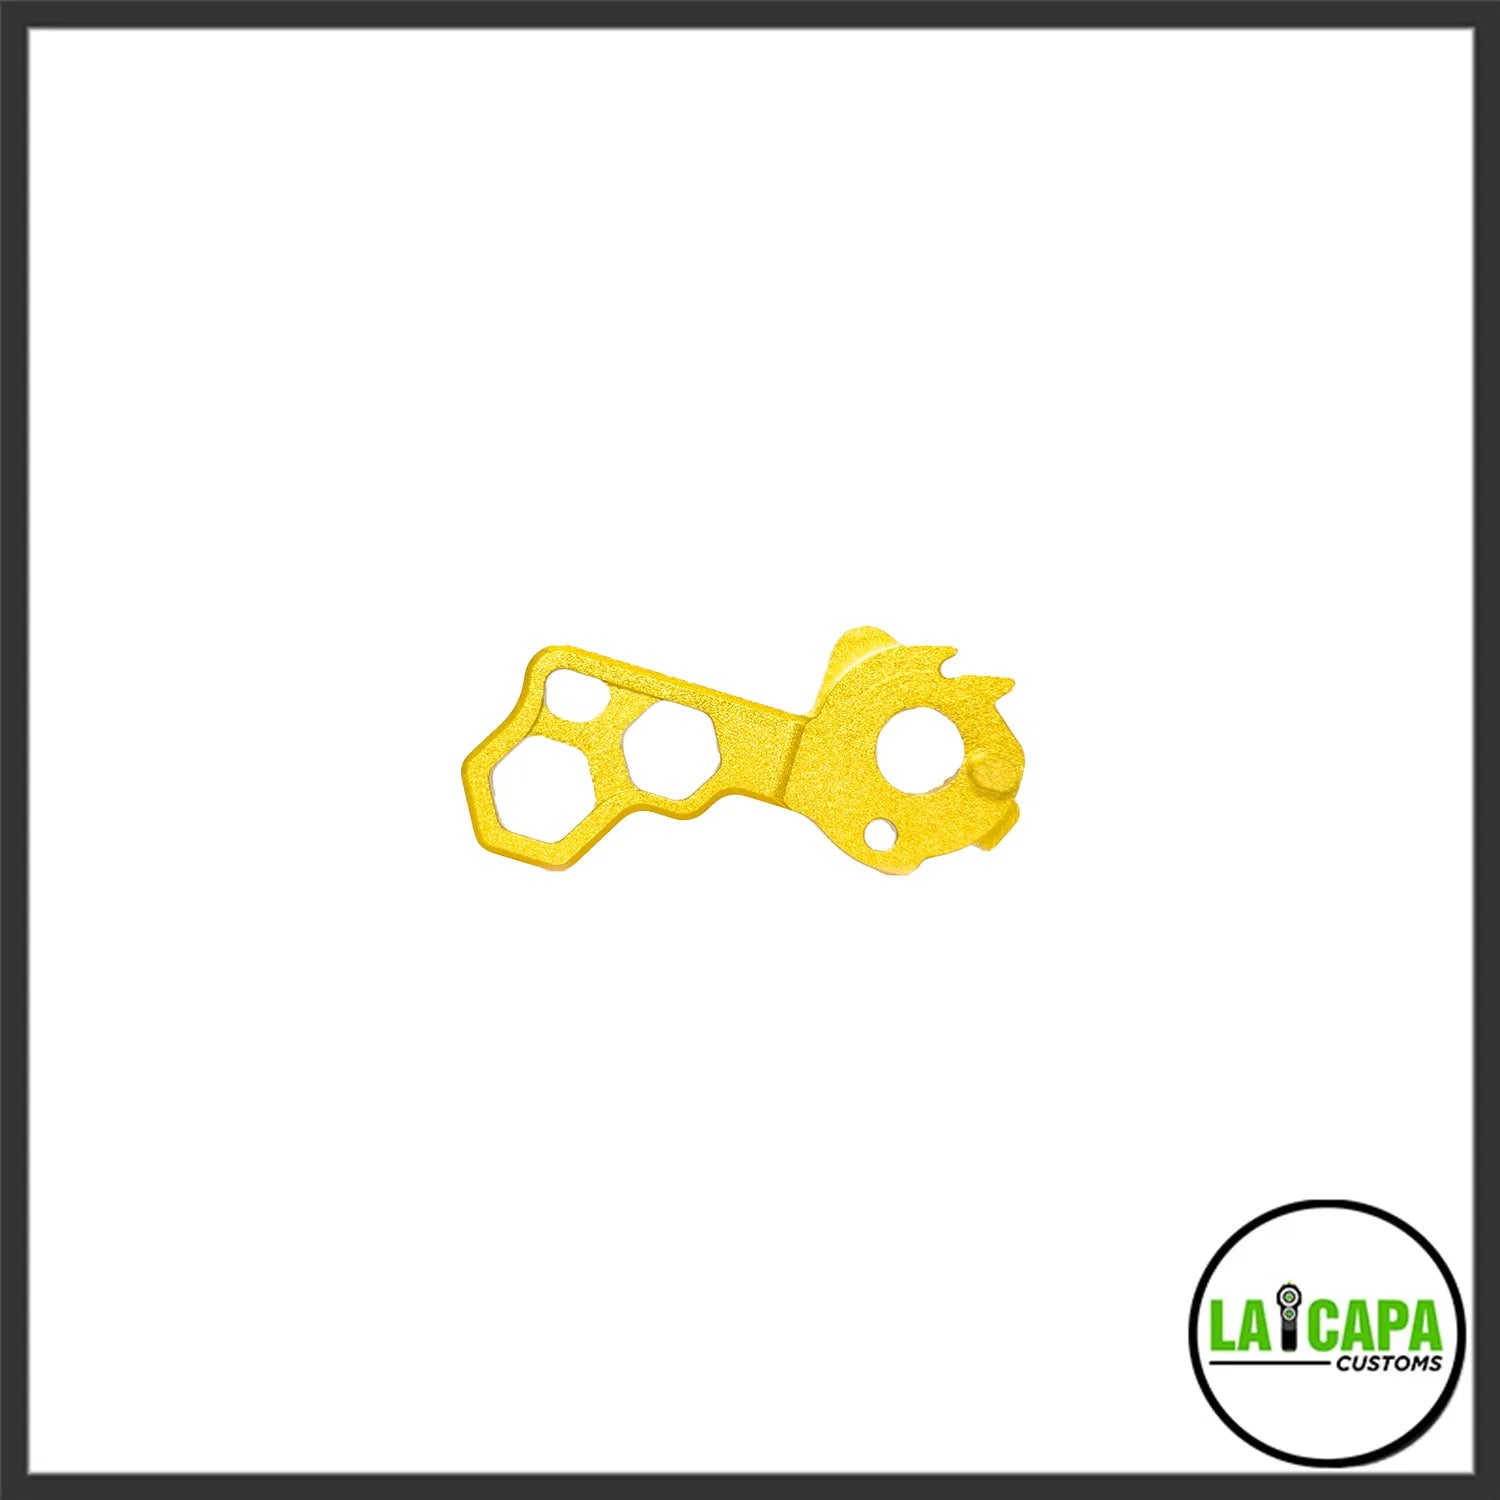 LA Capa Customs “HIVE” Duralumin Hammer for Hi Capa - Gold